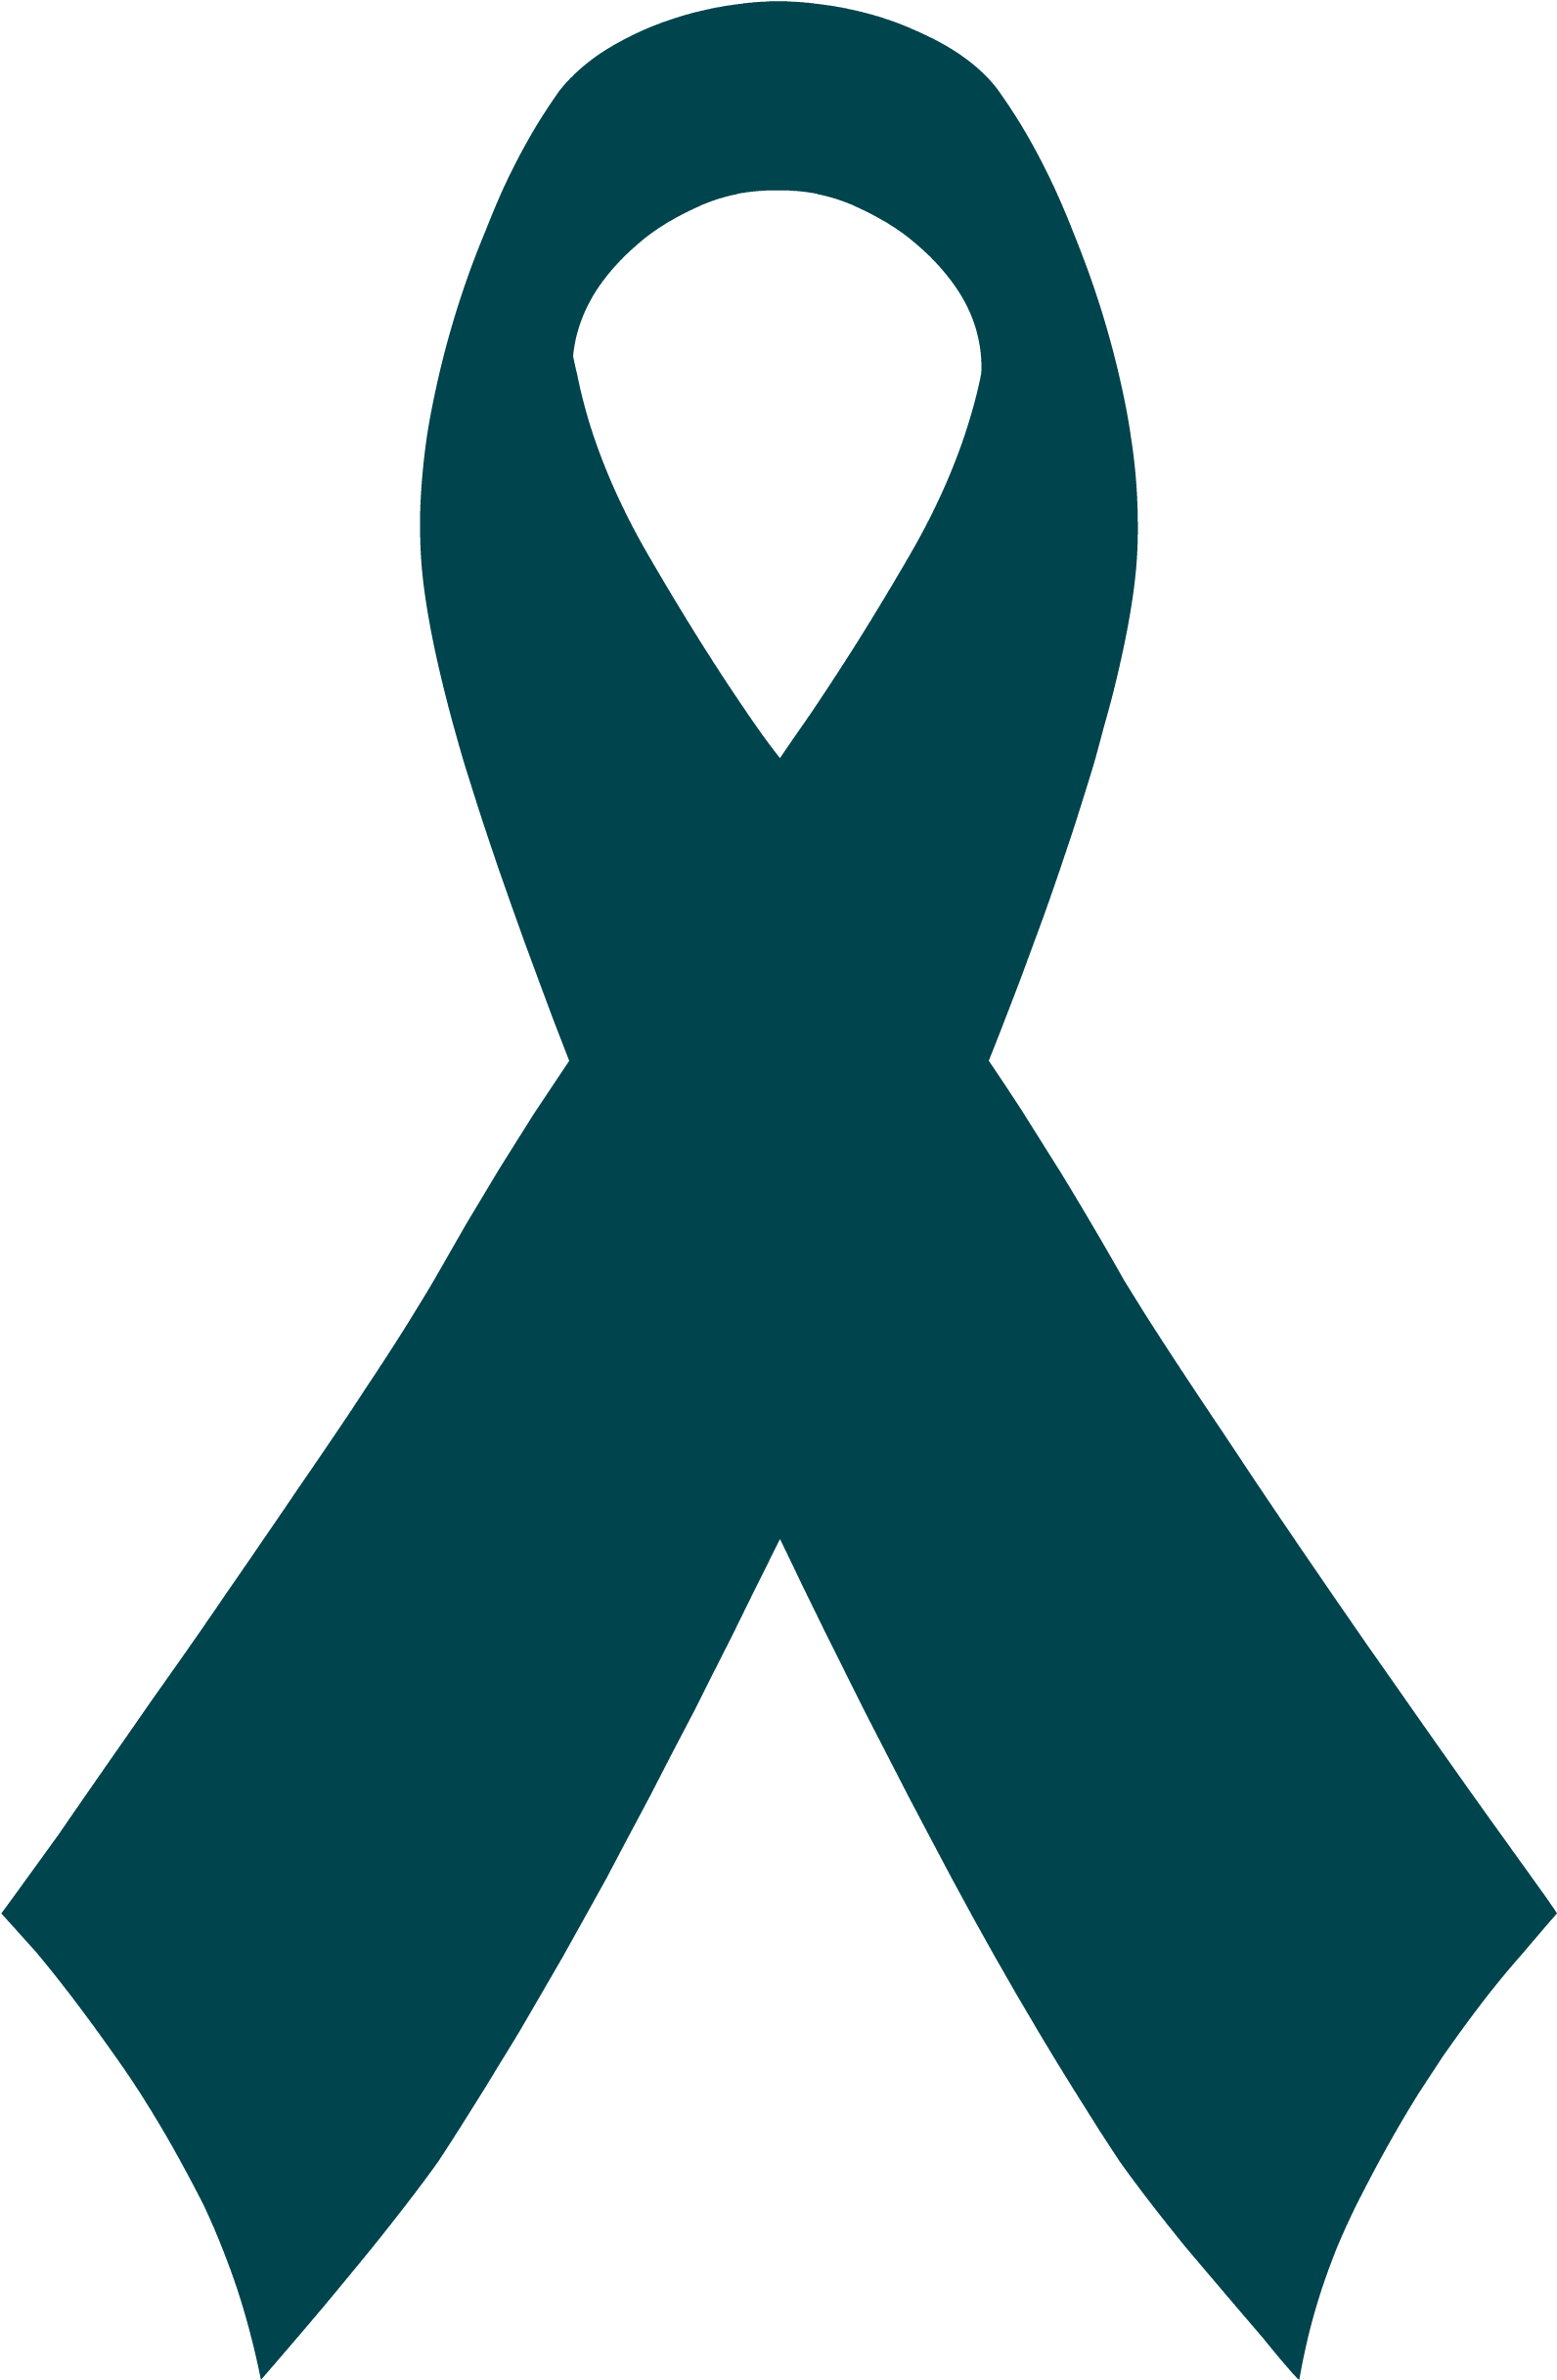 Reduce Risk Of Cancer - October 12 World Arthritis Day (2382x3082)